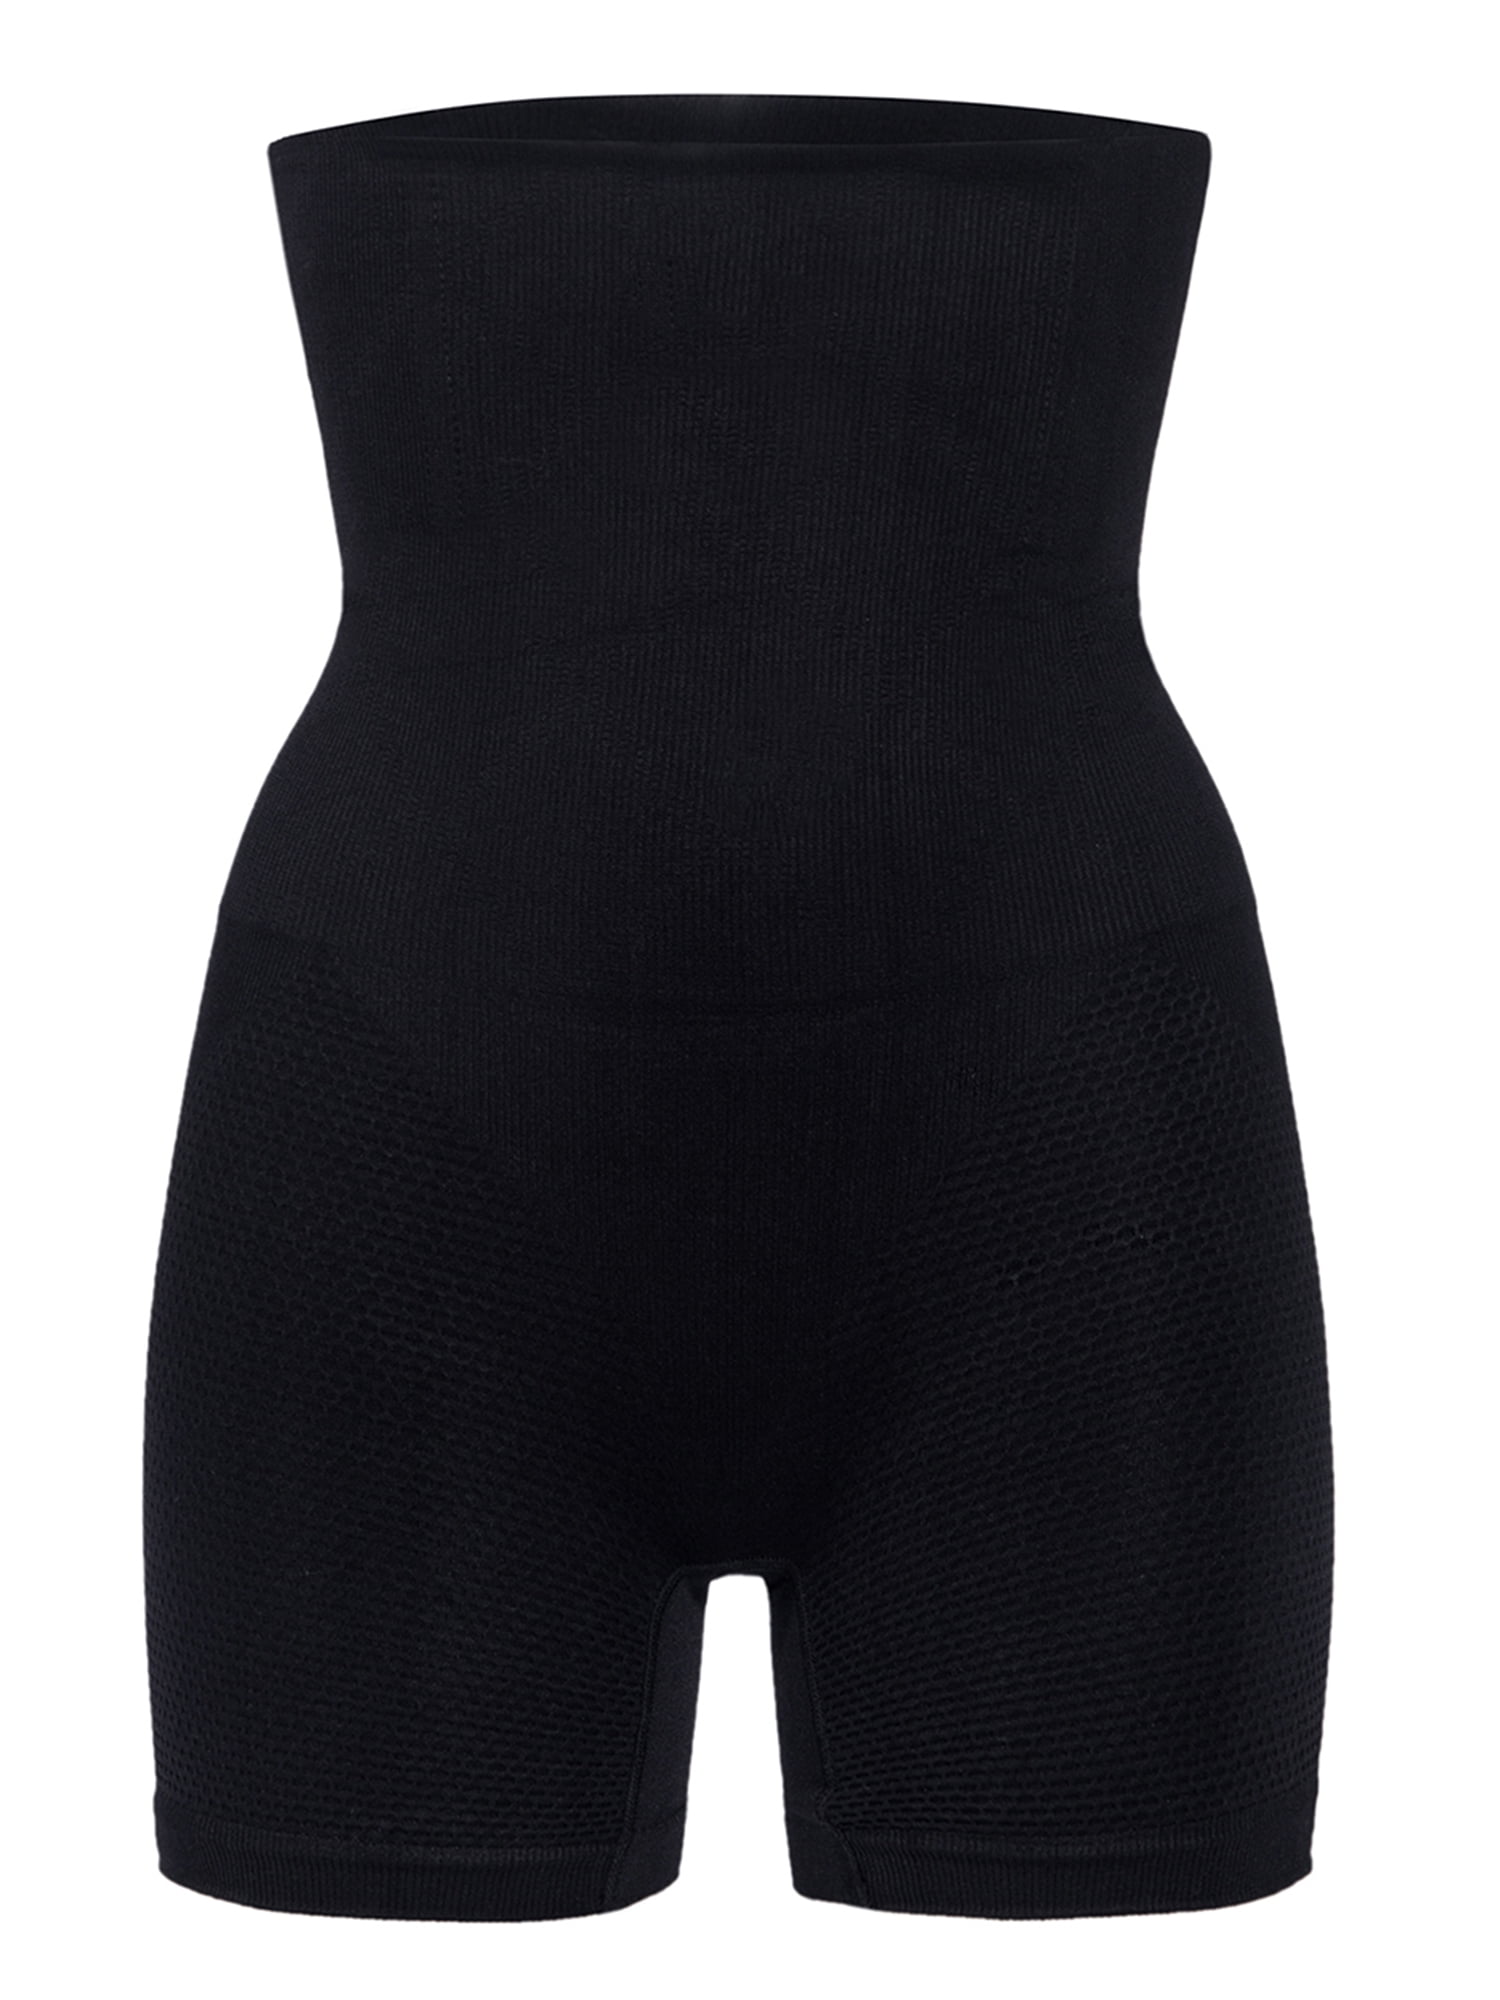 Black Solid Tummy Hip And Thigh Shapewear 2838046.htm - Buy Black